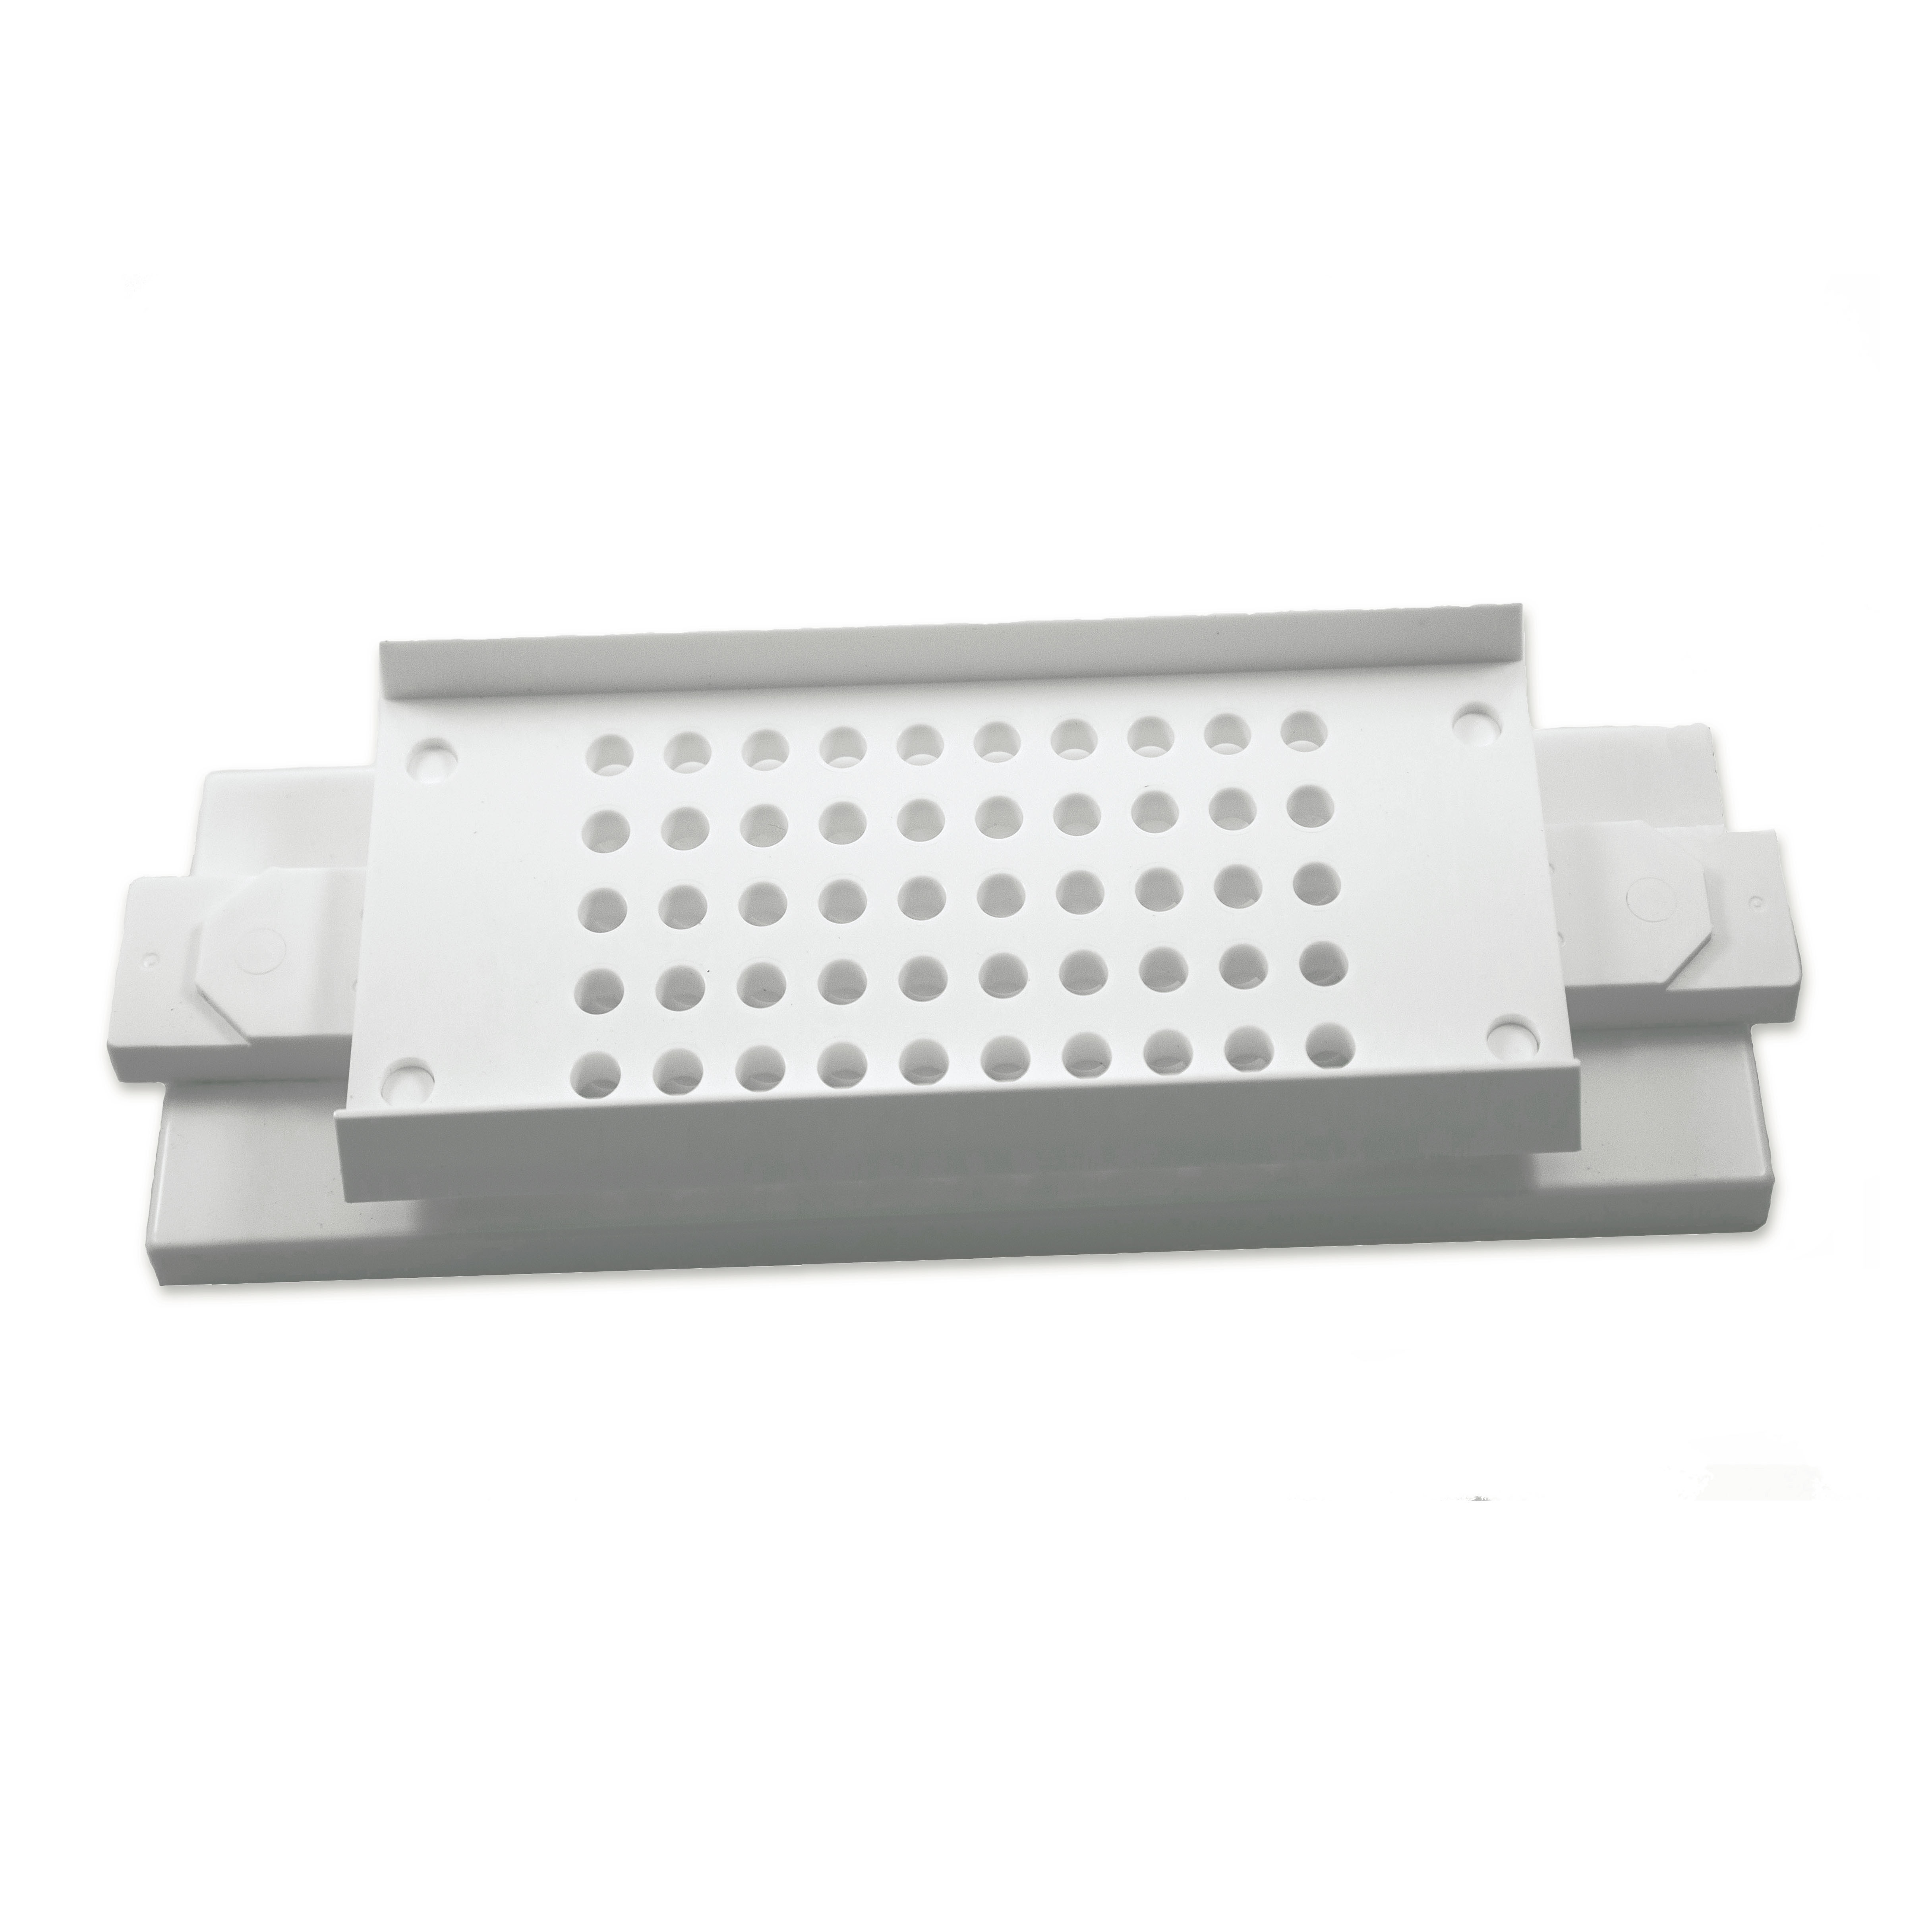 Manual Encapsulator For “0” Capsules